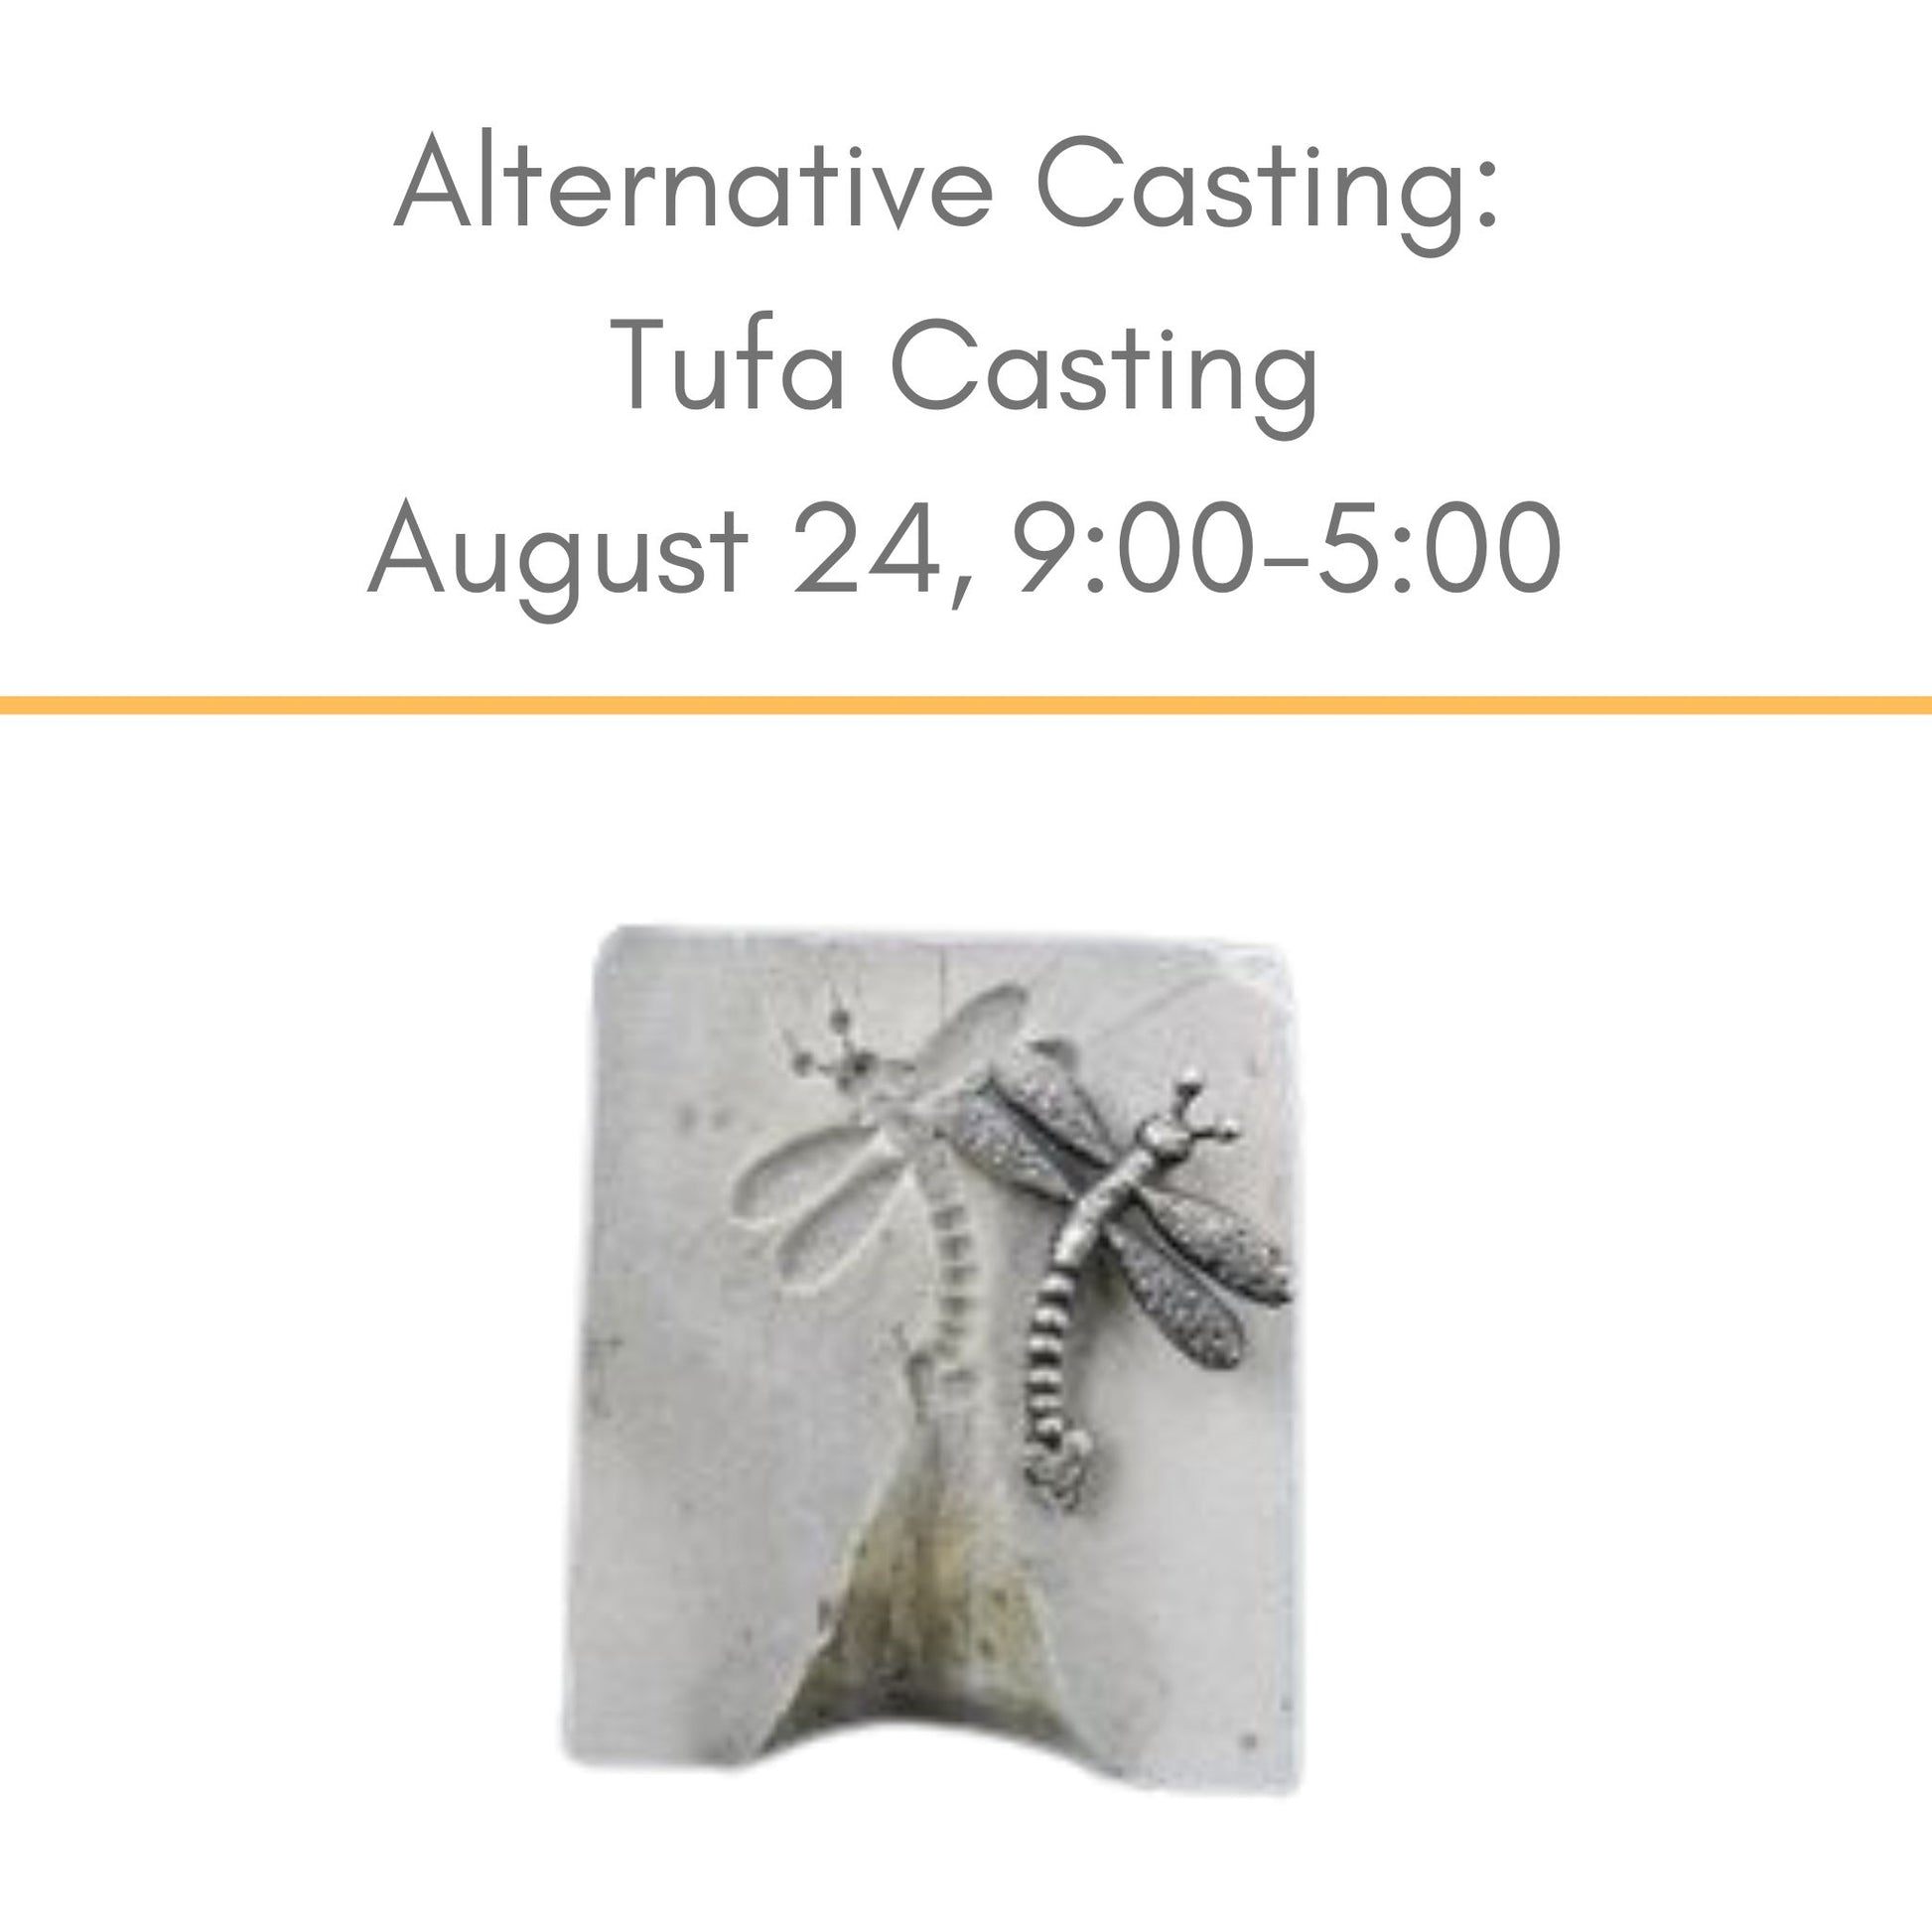 Alternativve casting: tufa casting class August 24 at Silver Peak Studio